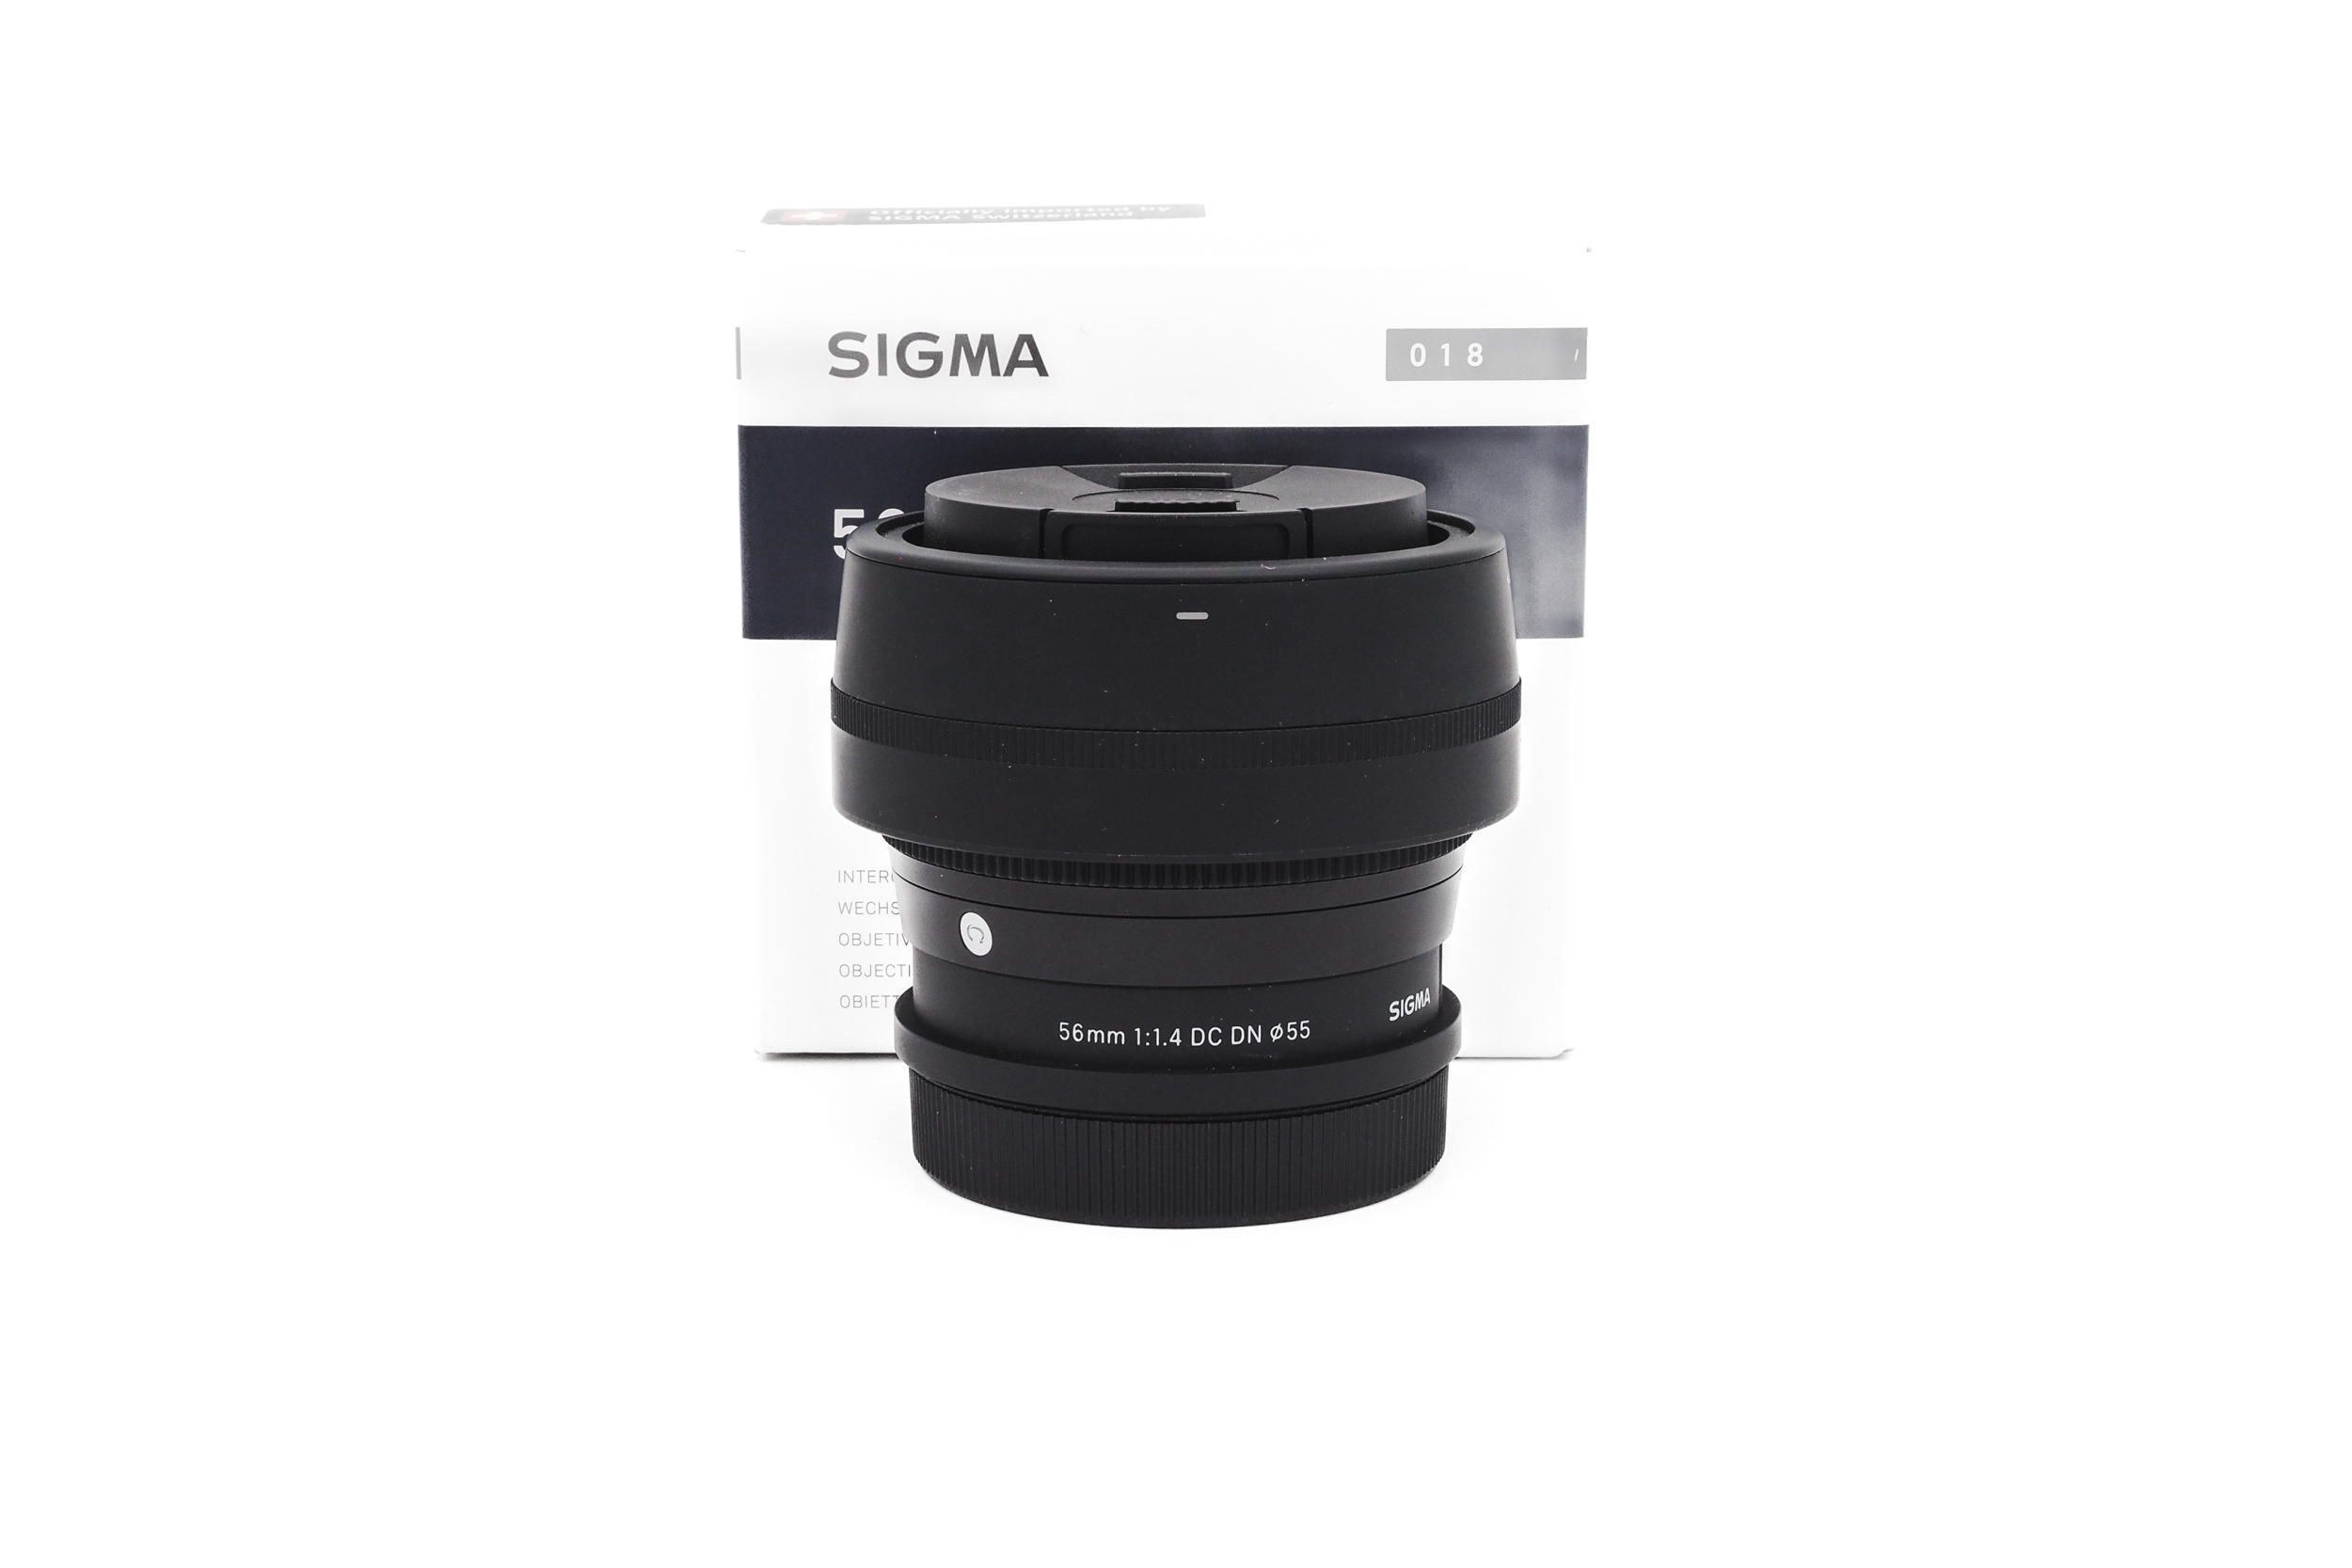 Sigma 56mm f/1.4 DC DN C